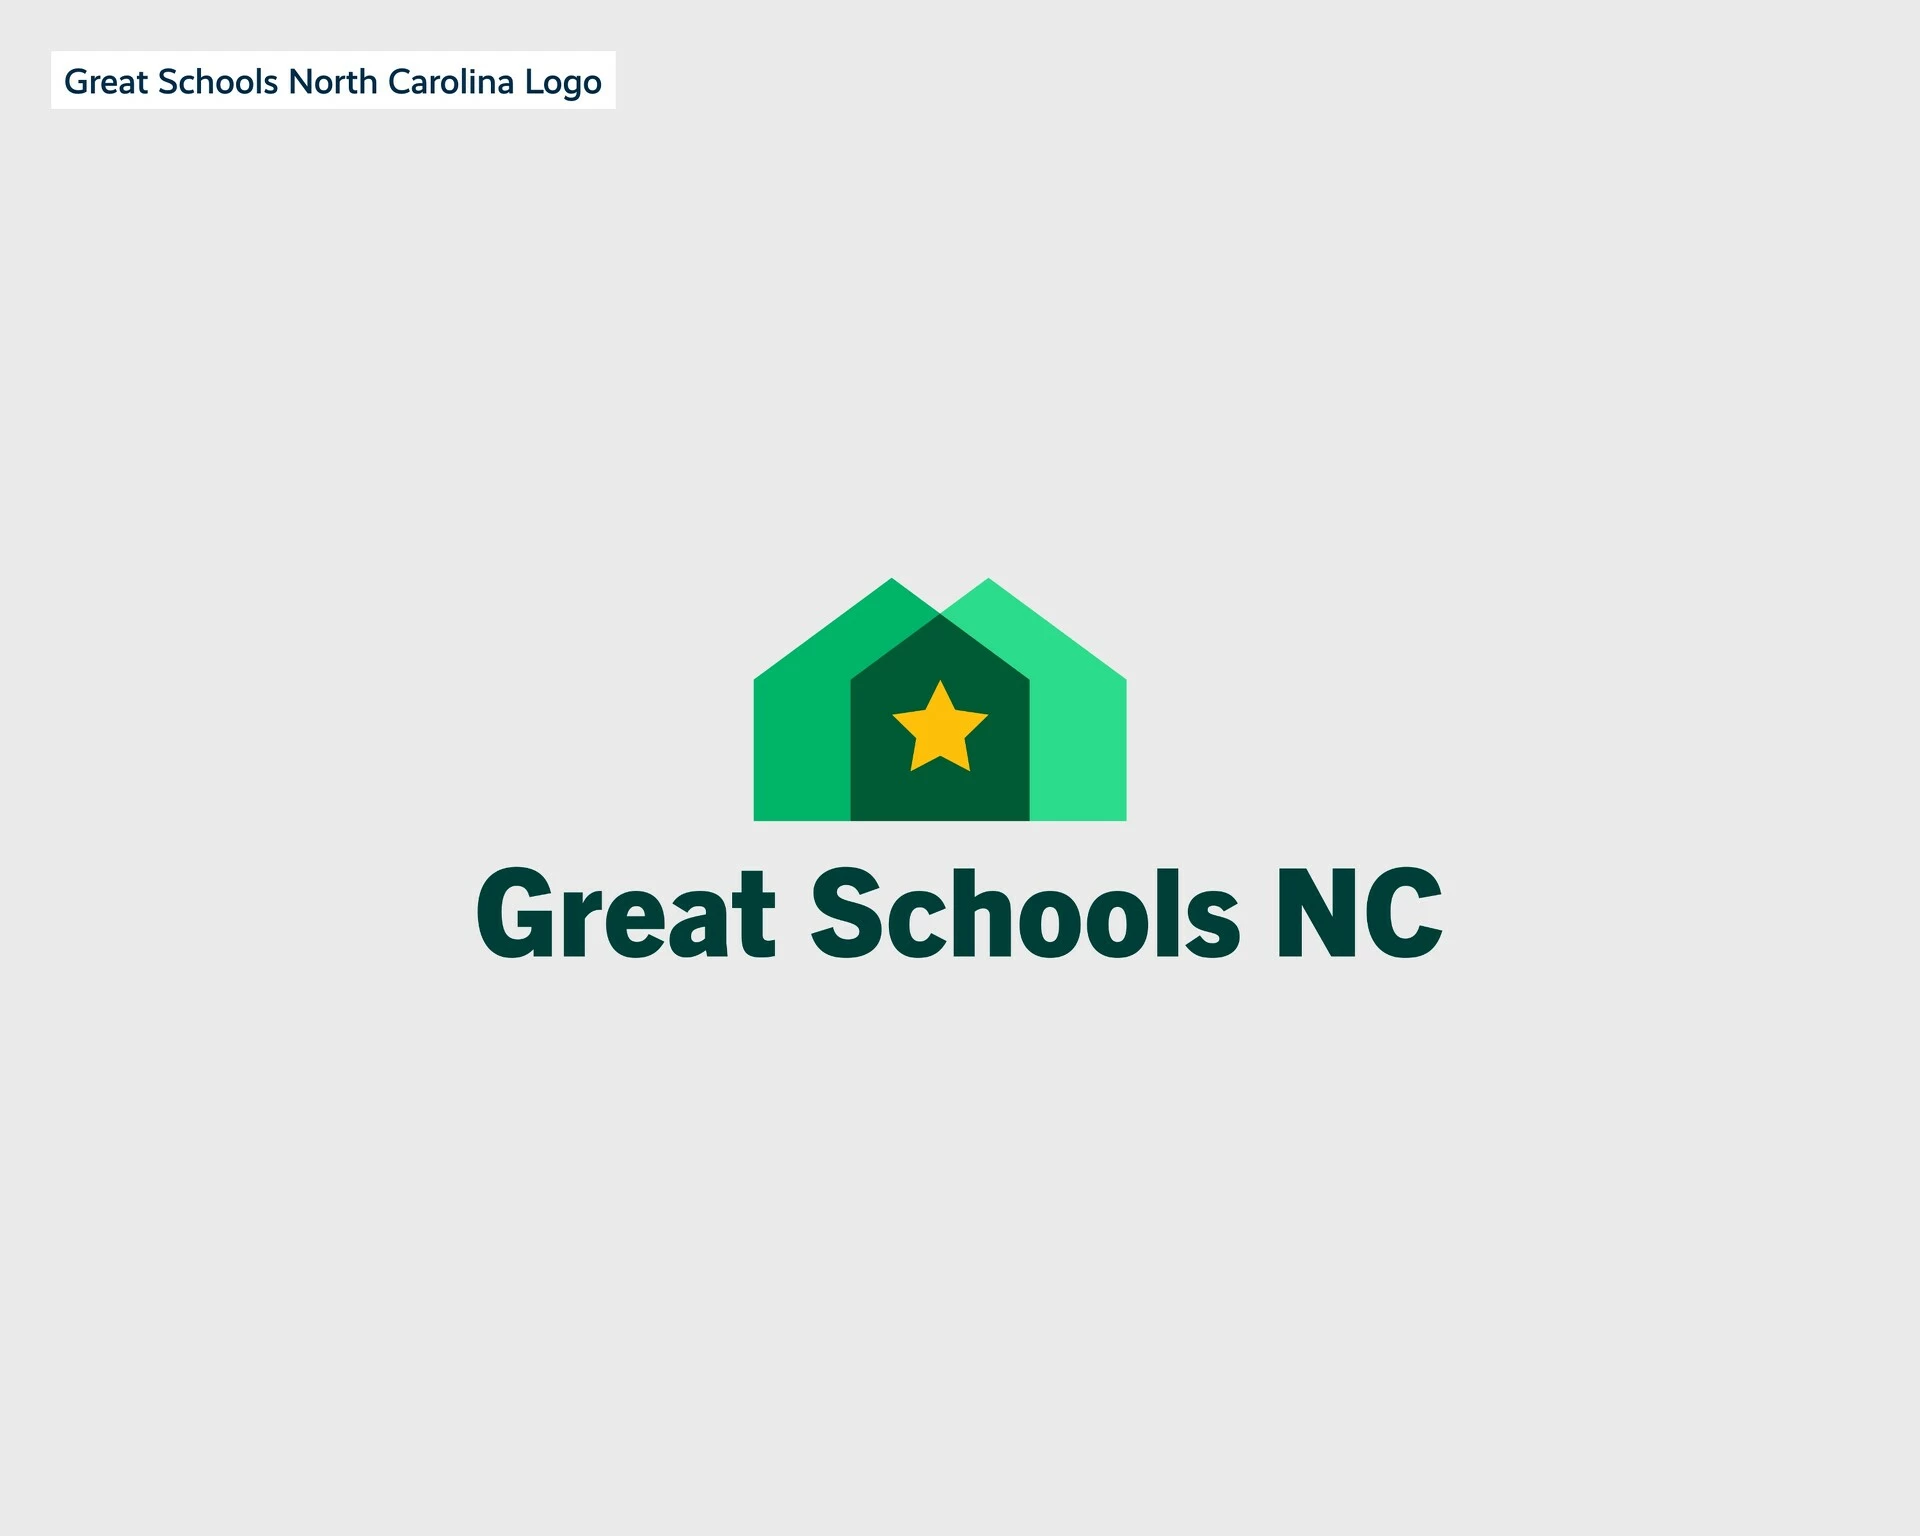 Great Schools NC Logo